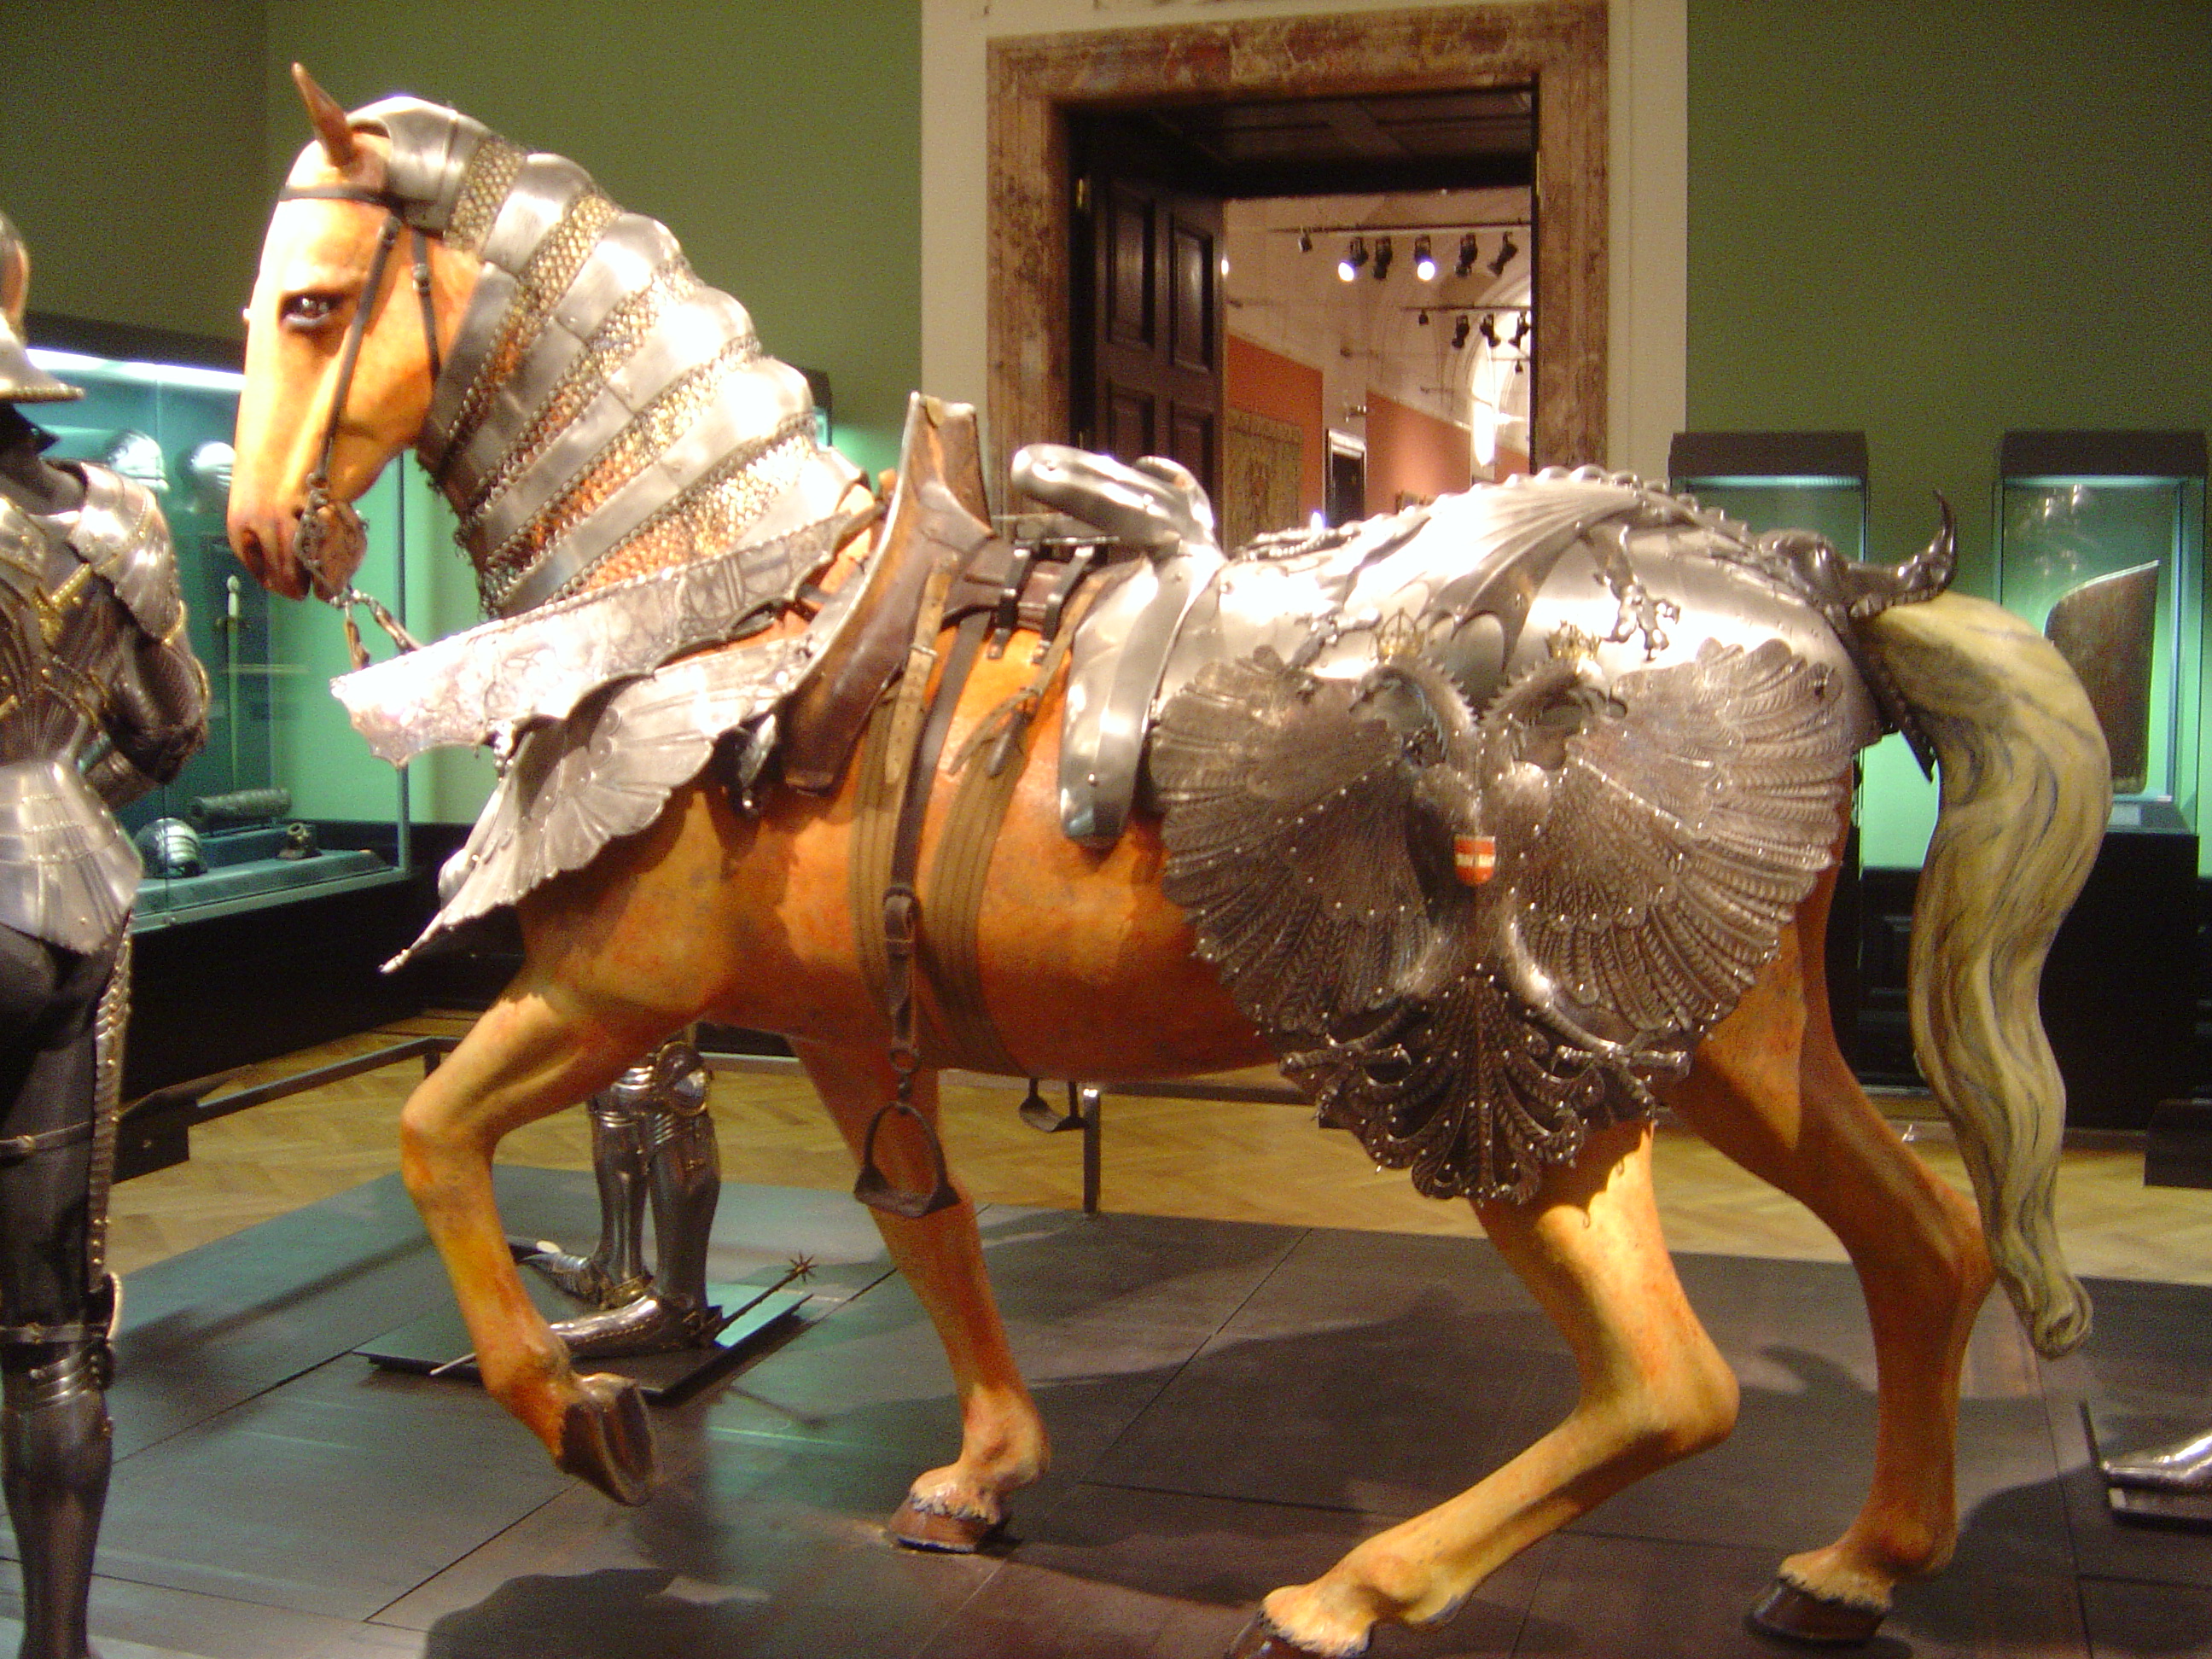 file-horse-suit-of-armor-dsc02189-jpg-wikimedia-commons